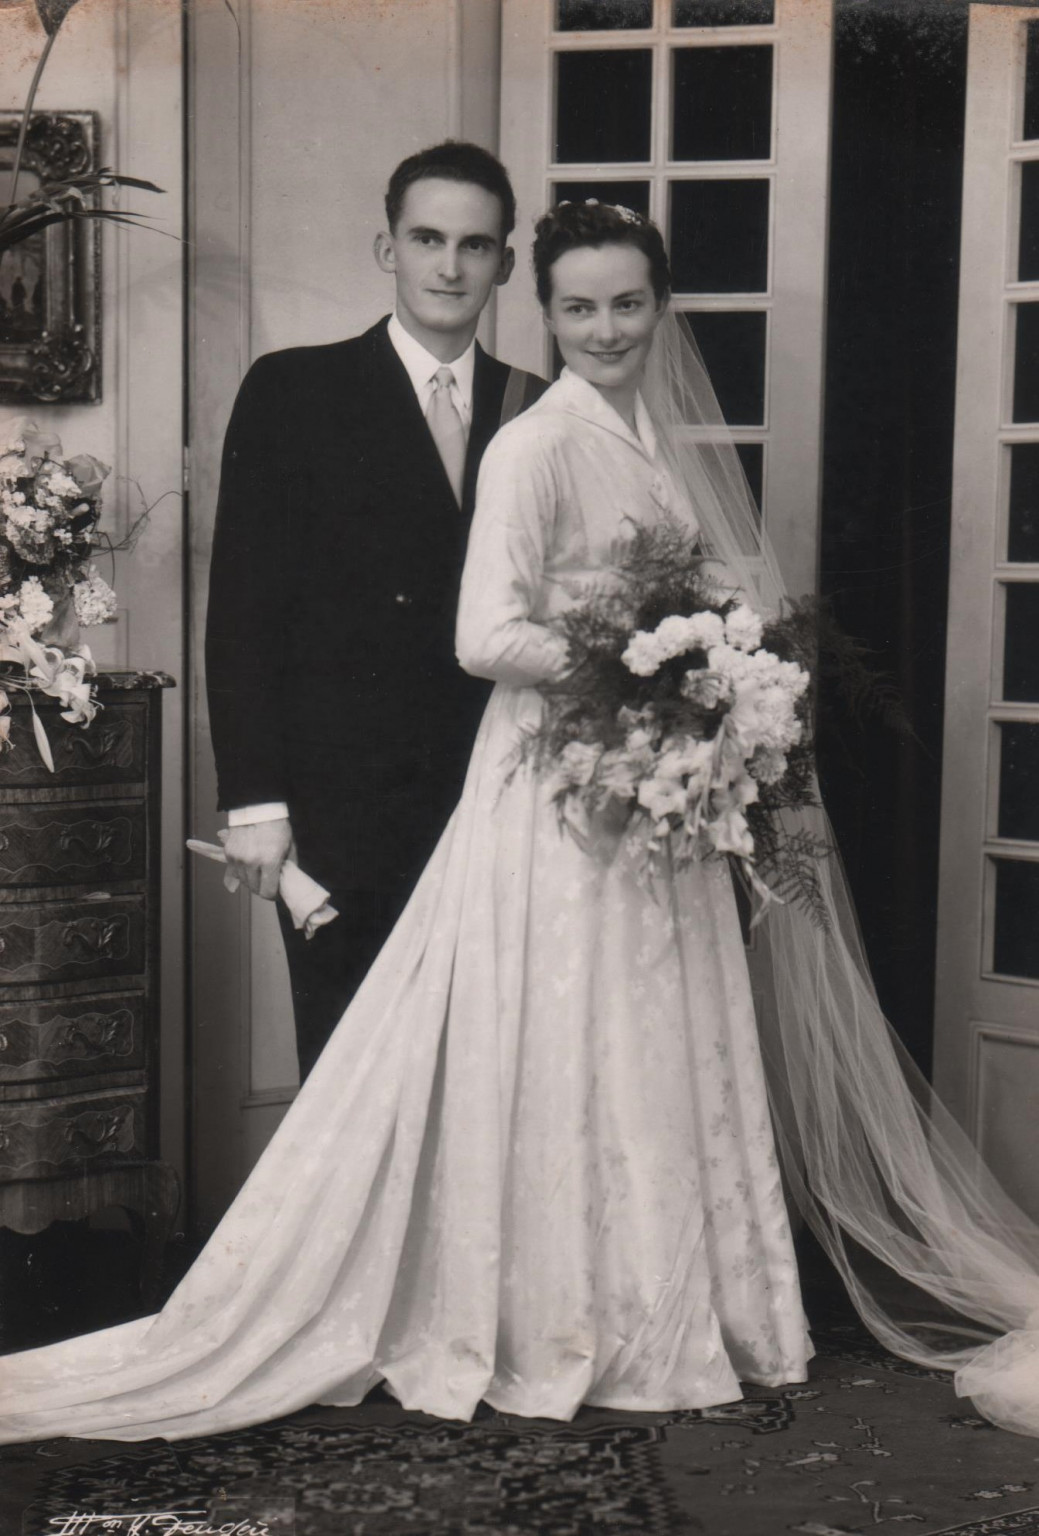 Mariage Pierre et Annie terrier  en 1953